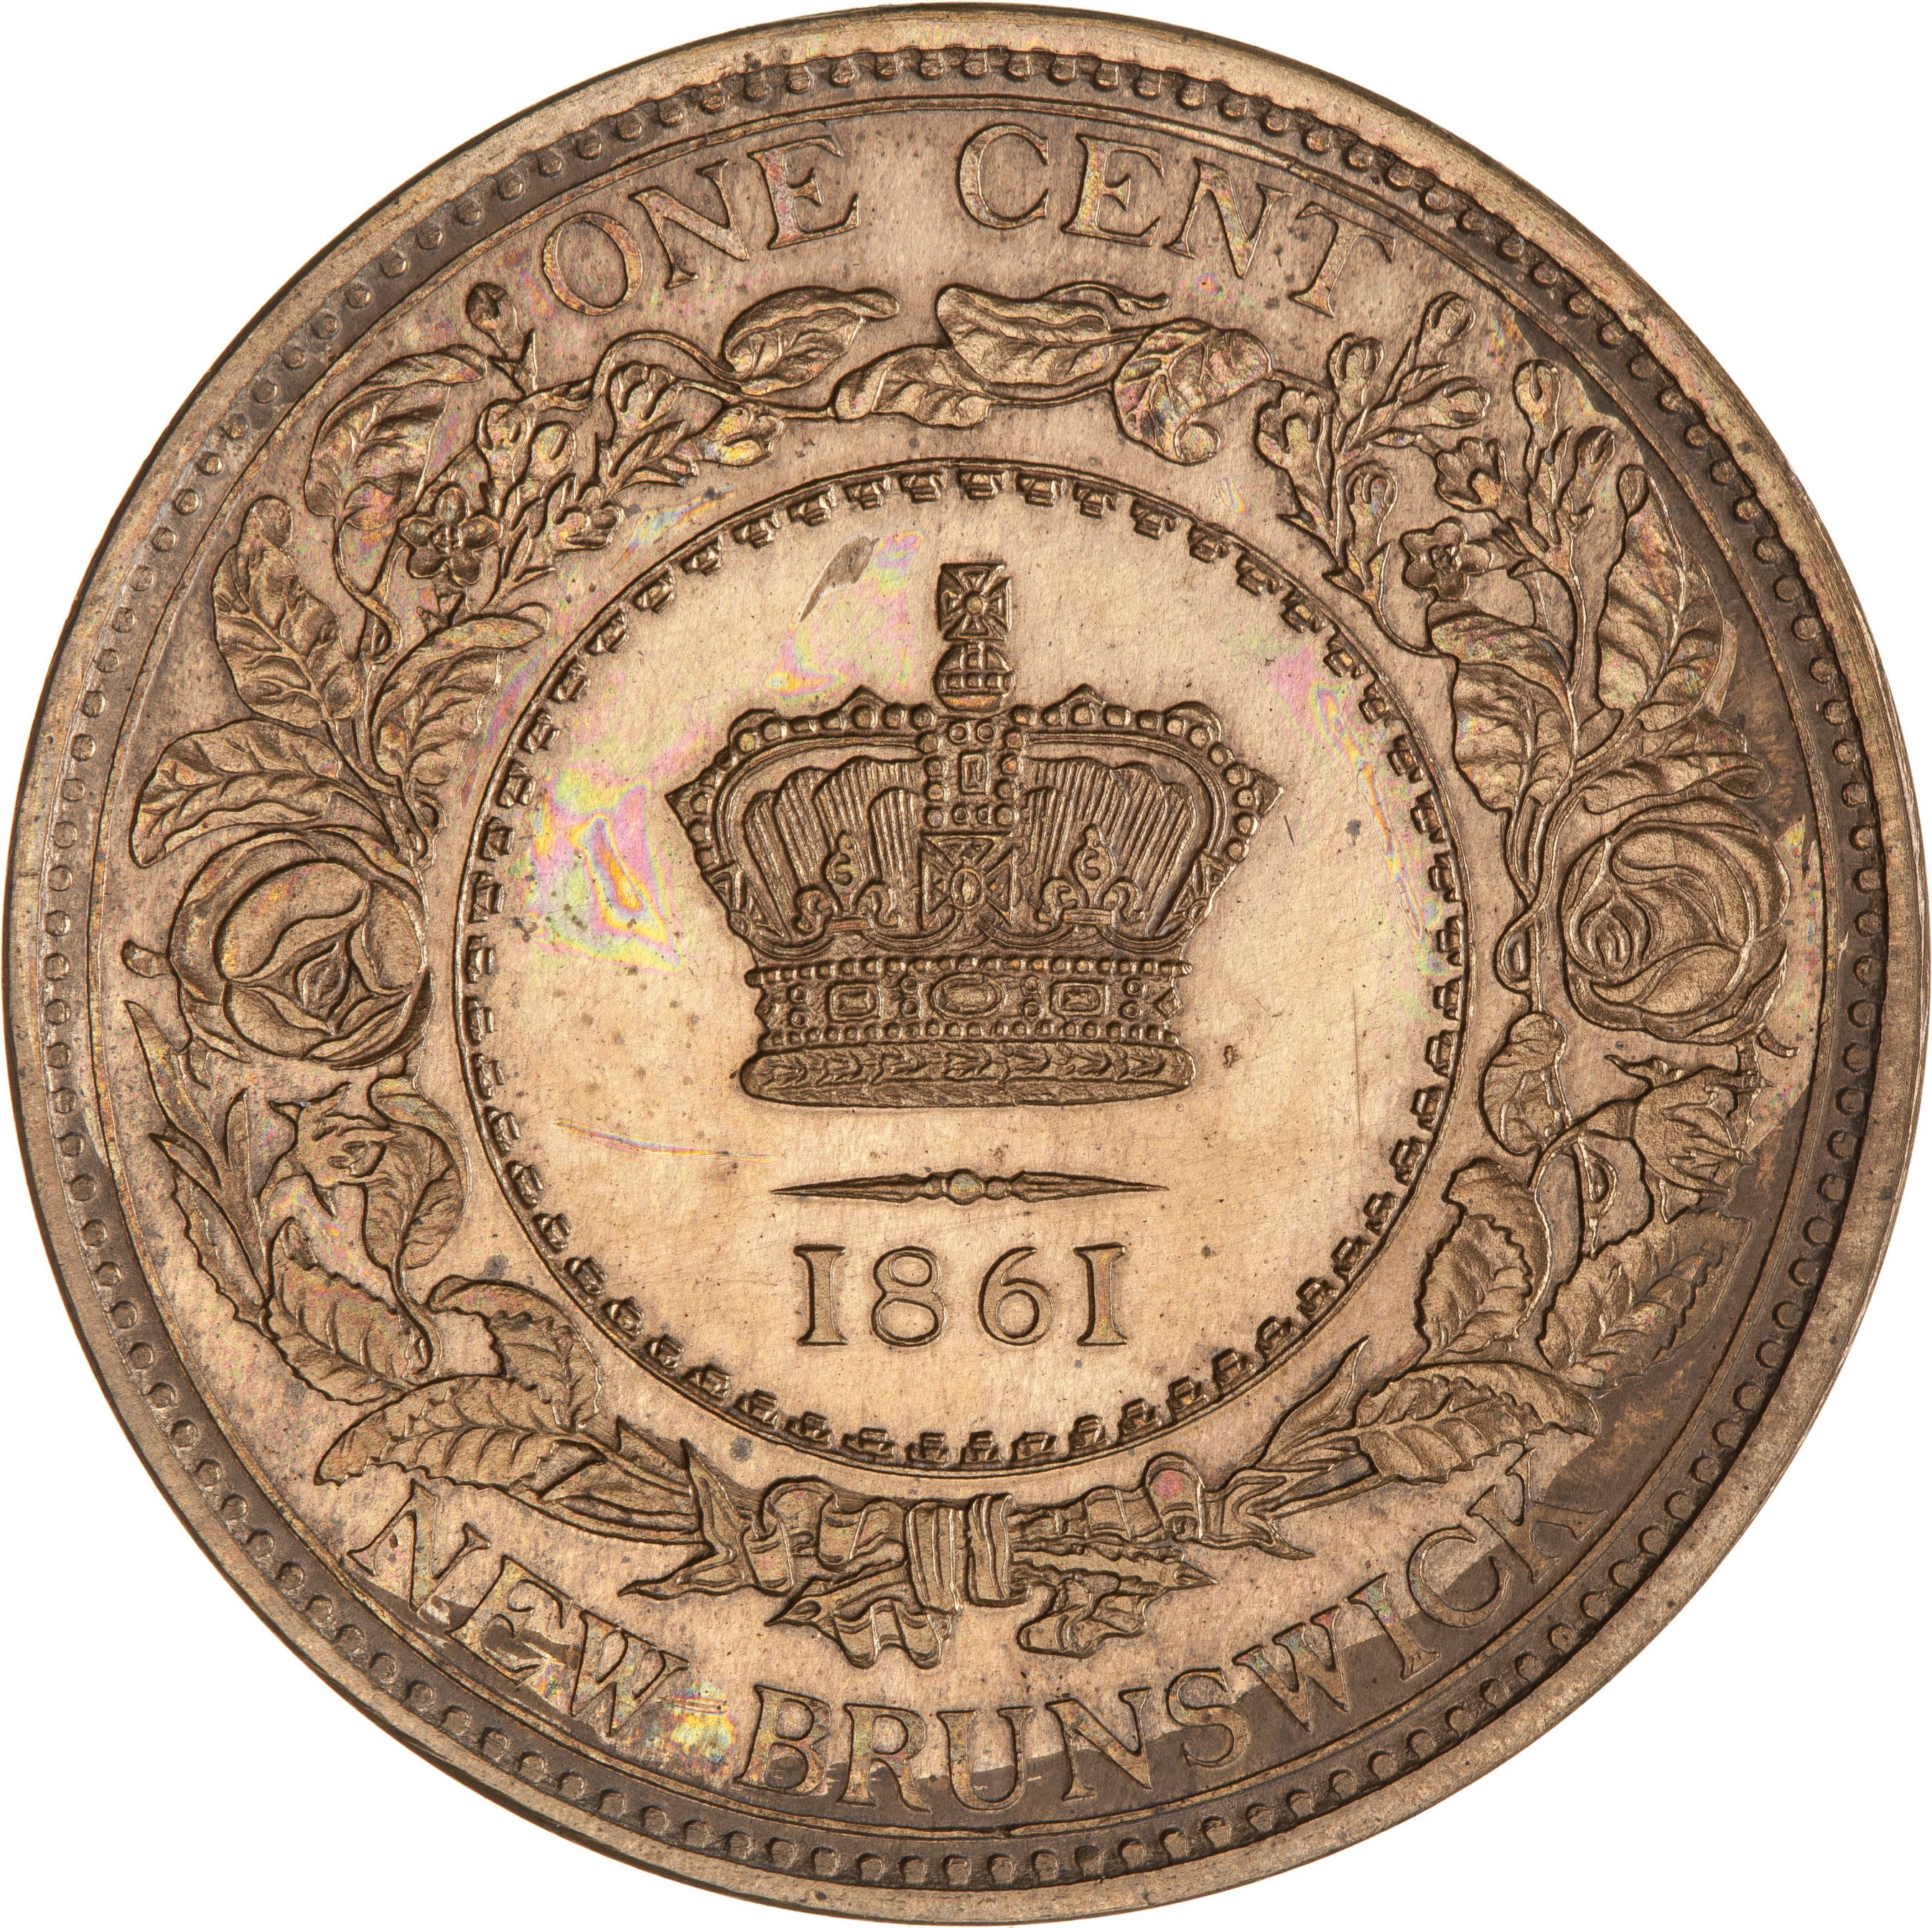 Reverse of 1861 New Brunswick One Cent Proof